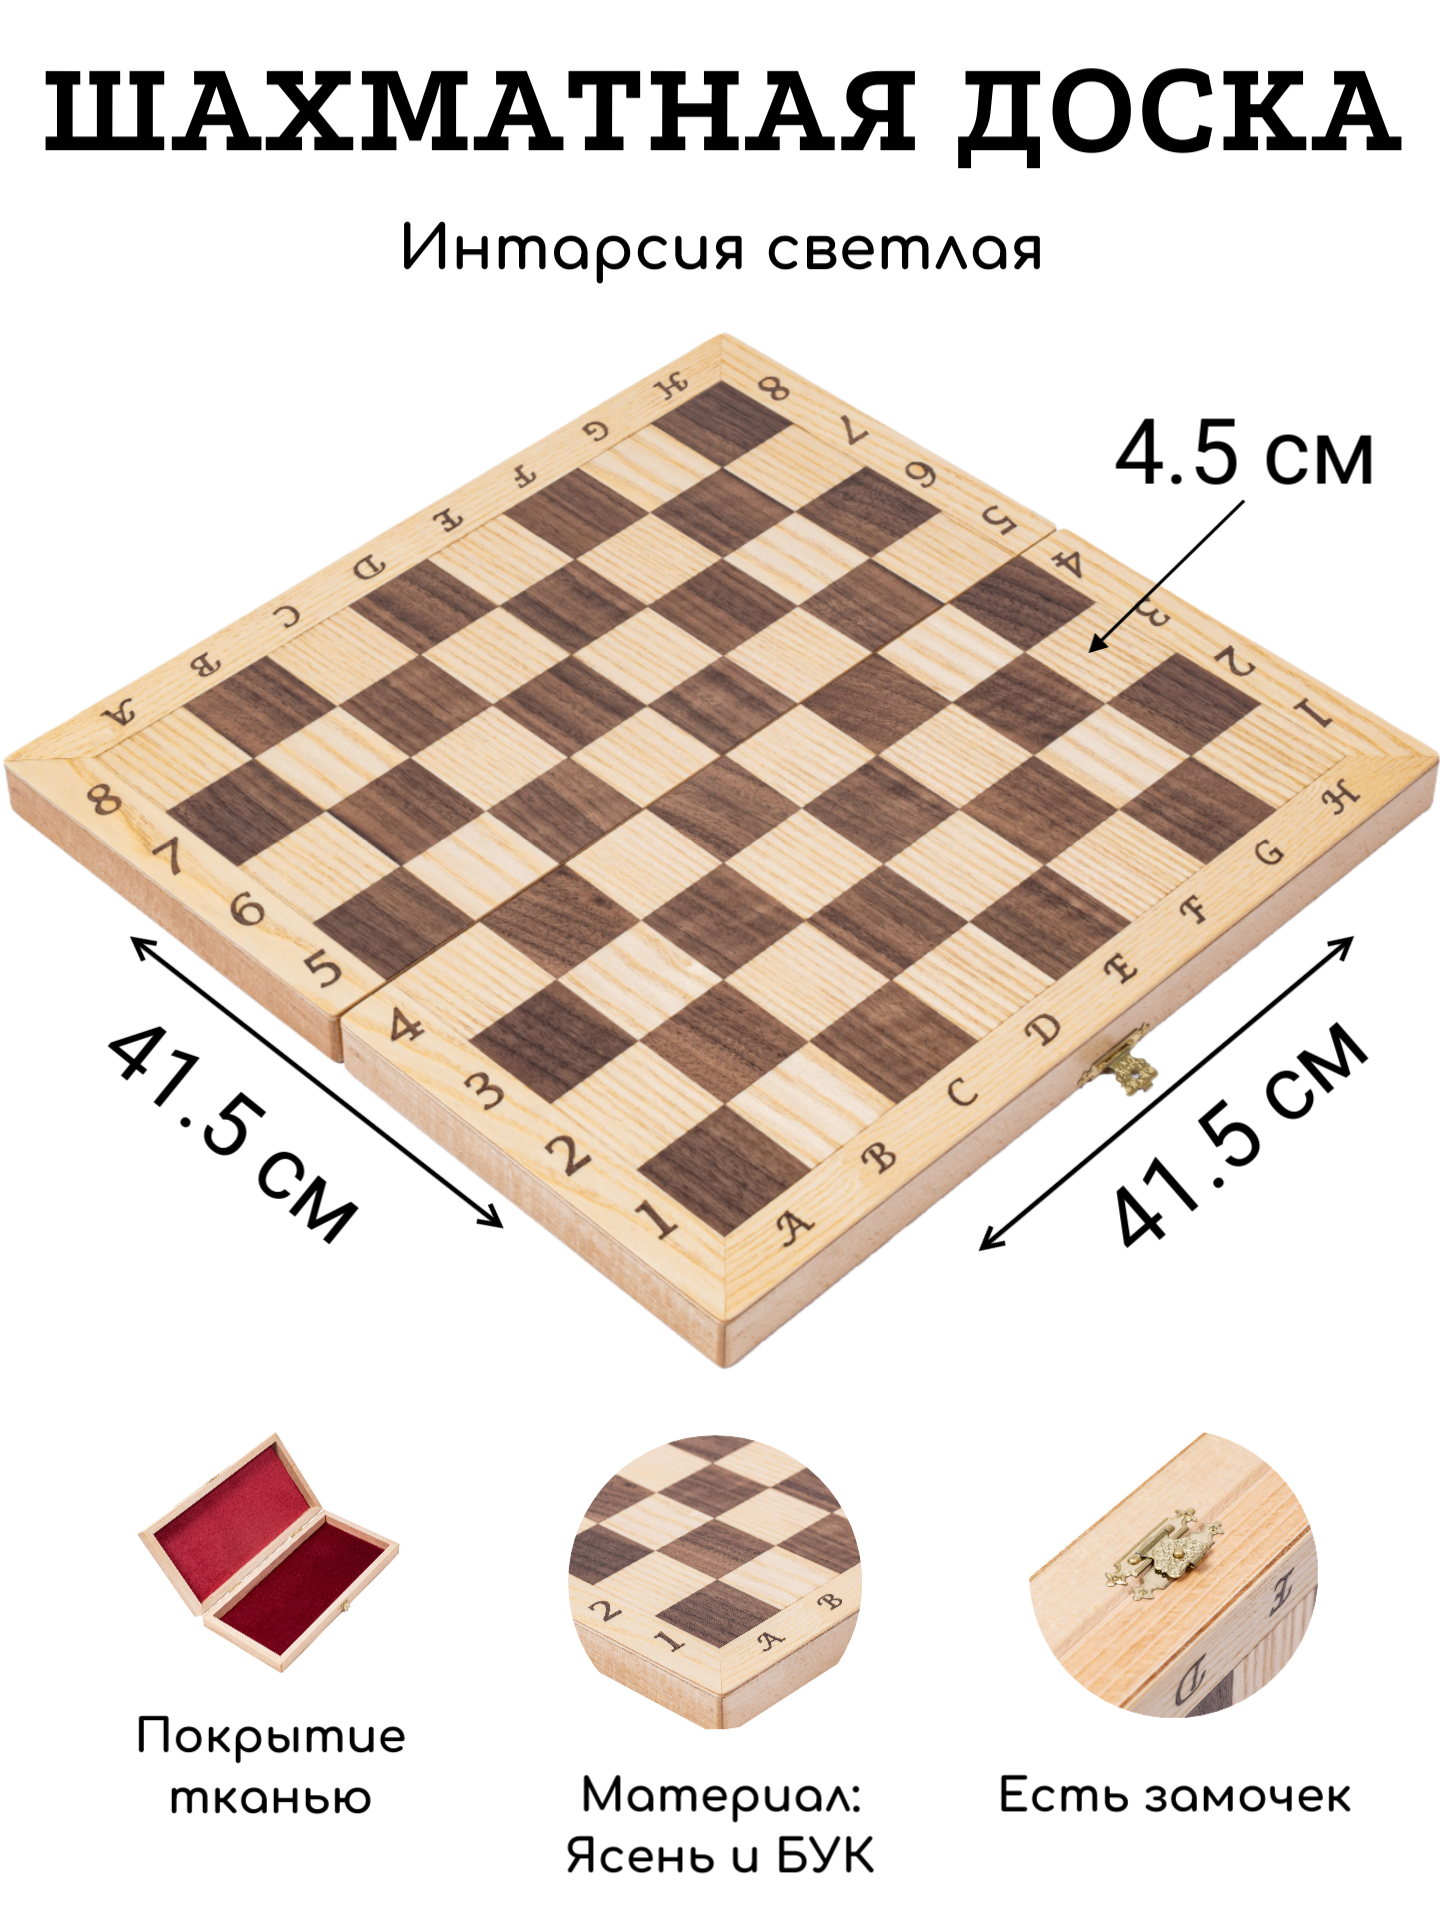 Шахматная доска без фигур Lavochkashop Турнирная 41 5 см интарсия stav042 шахматная доска 30 х 30 х 1 5 см пластик